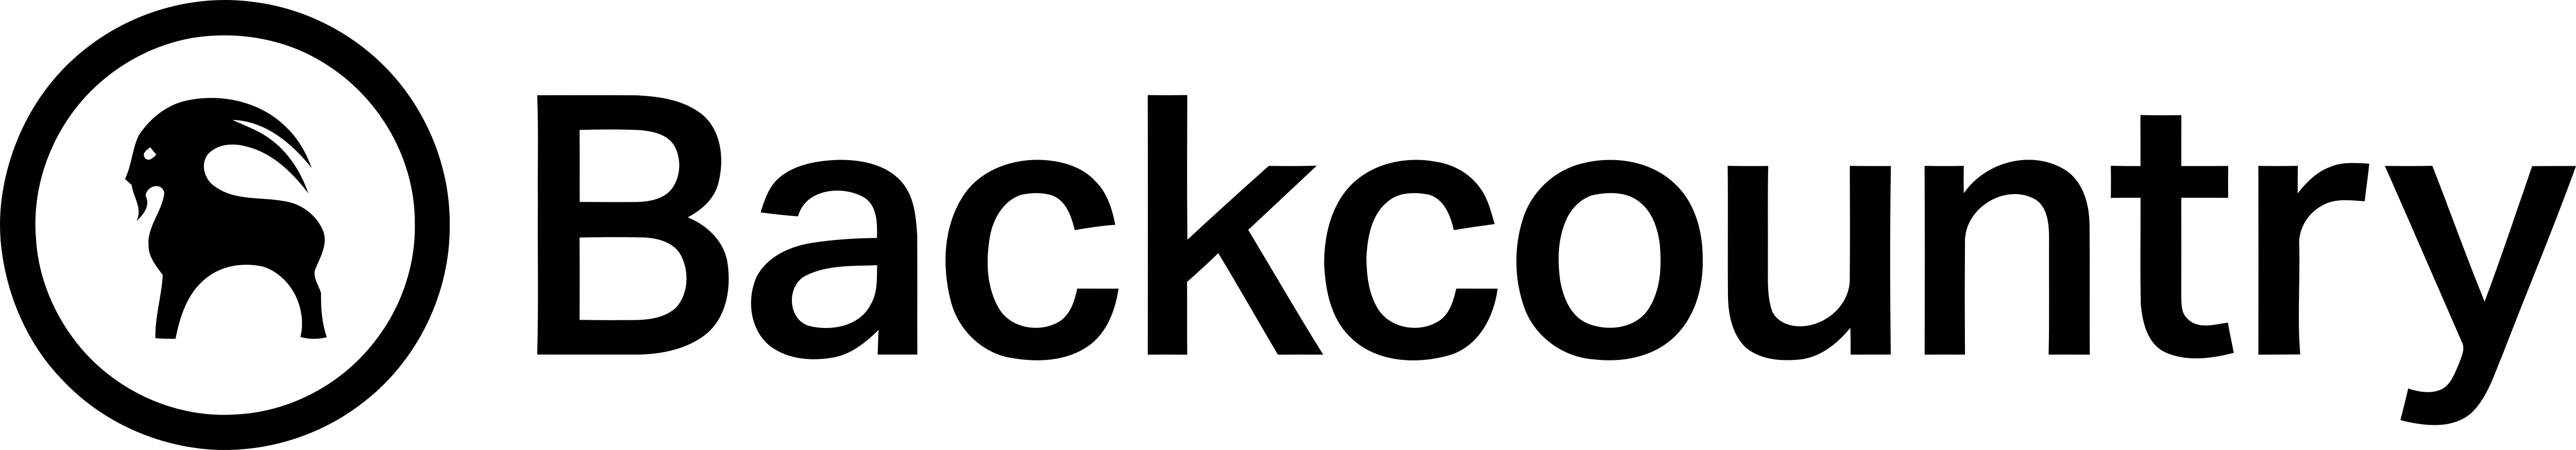 Backcountry Logo